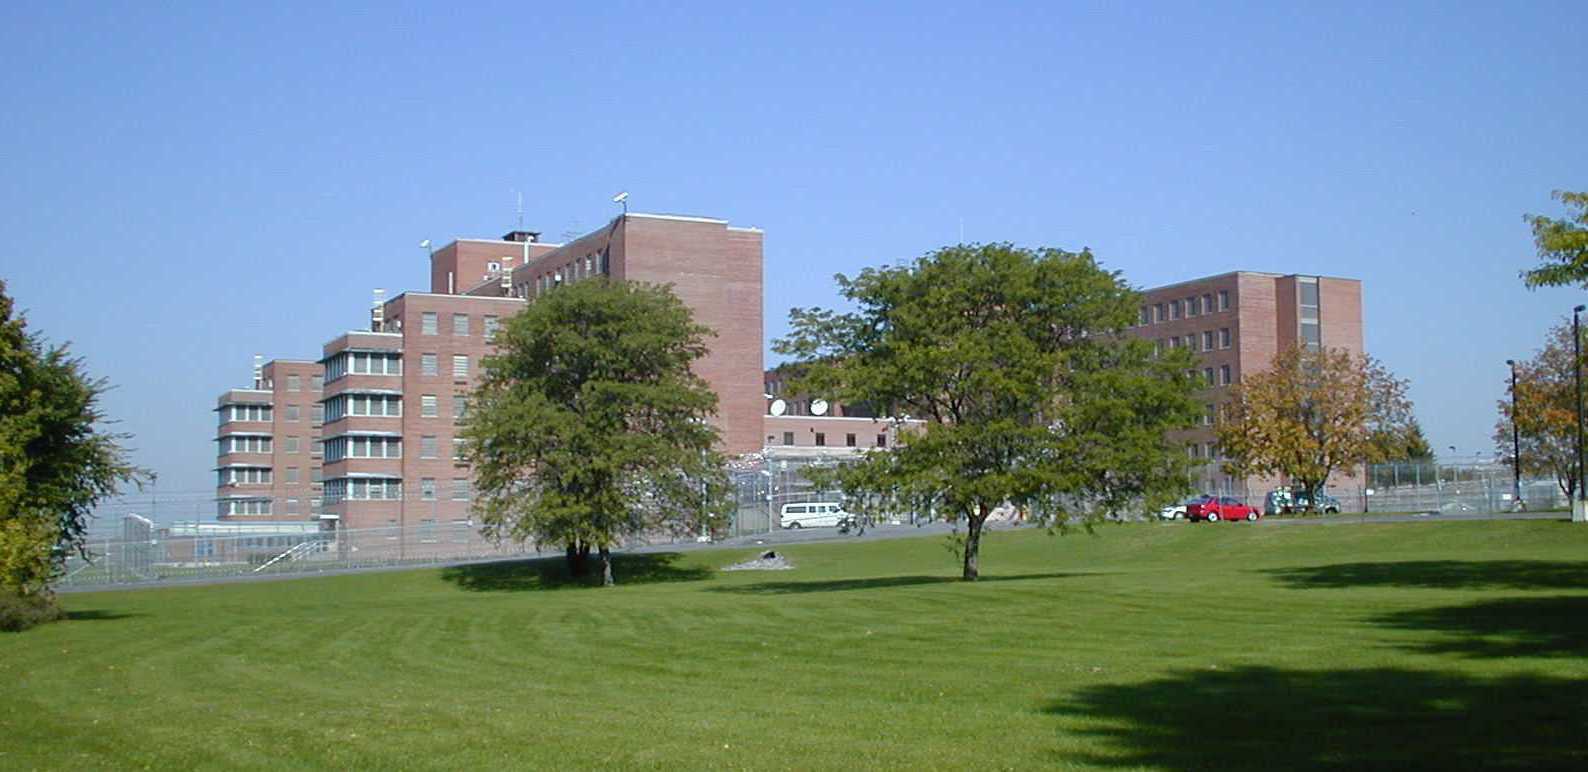 Central New York Psychiatric CenterPsychiatric Center